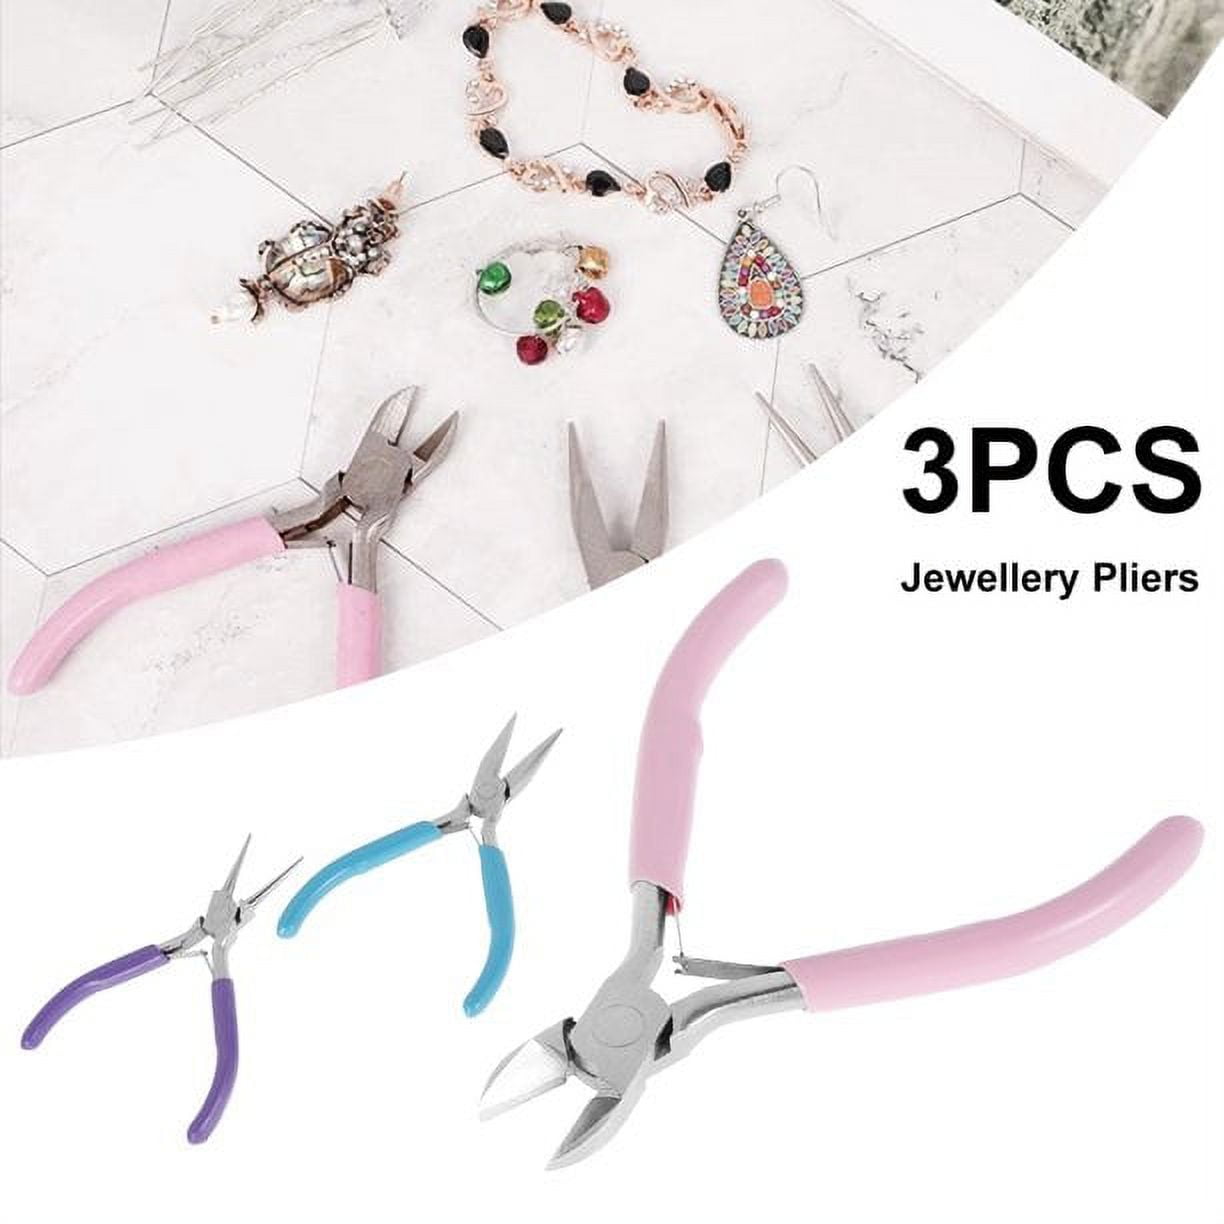 Odomy 3pcs Mini Pliers, Jewelry Pliers Set, Diagonal Pliers & Needle-Nose Pliers & Round Nose Pliers, Jewelry Repair Tool, Pliers Set for Hobby DIY